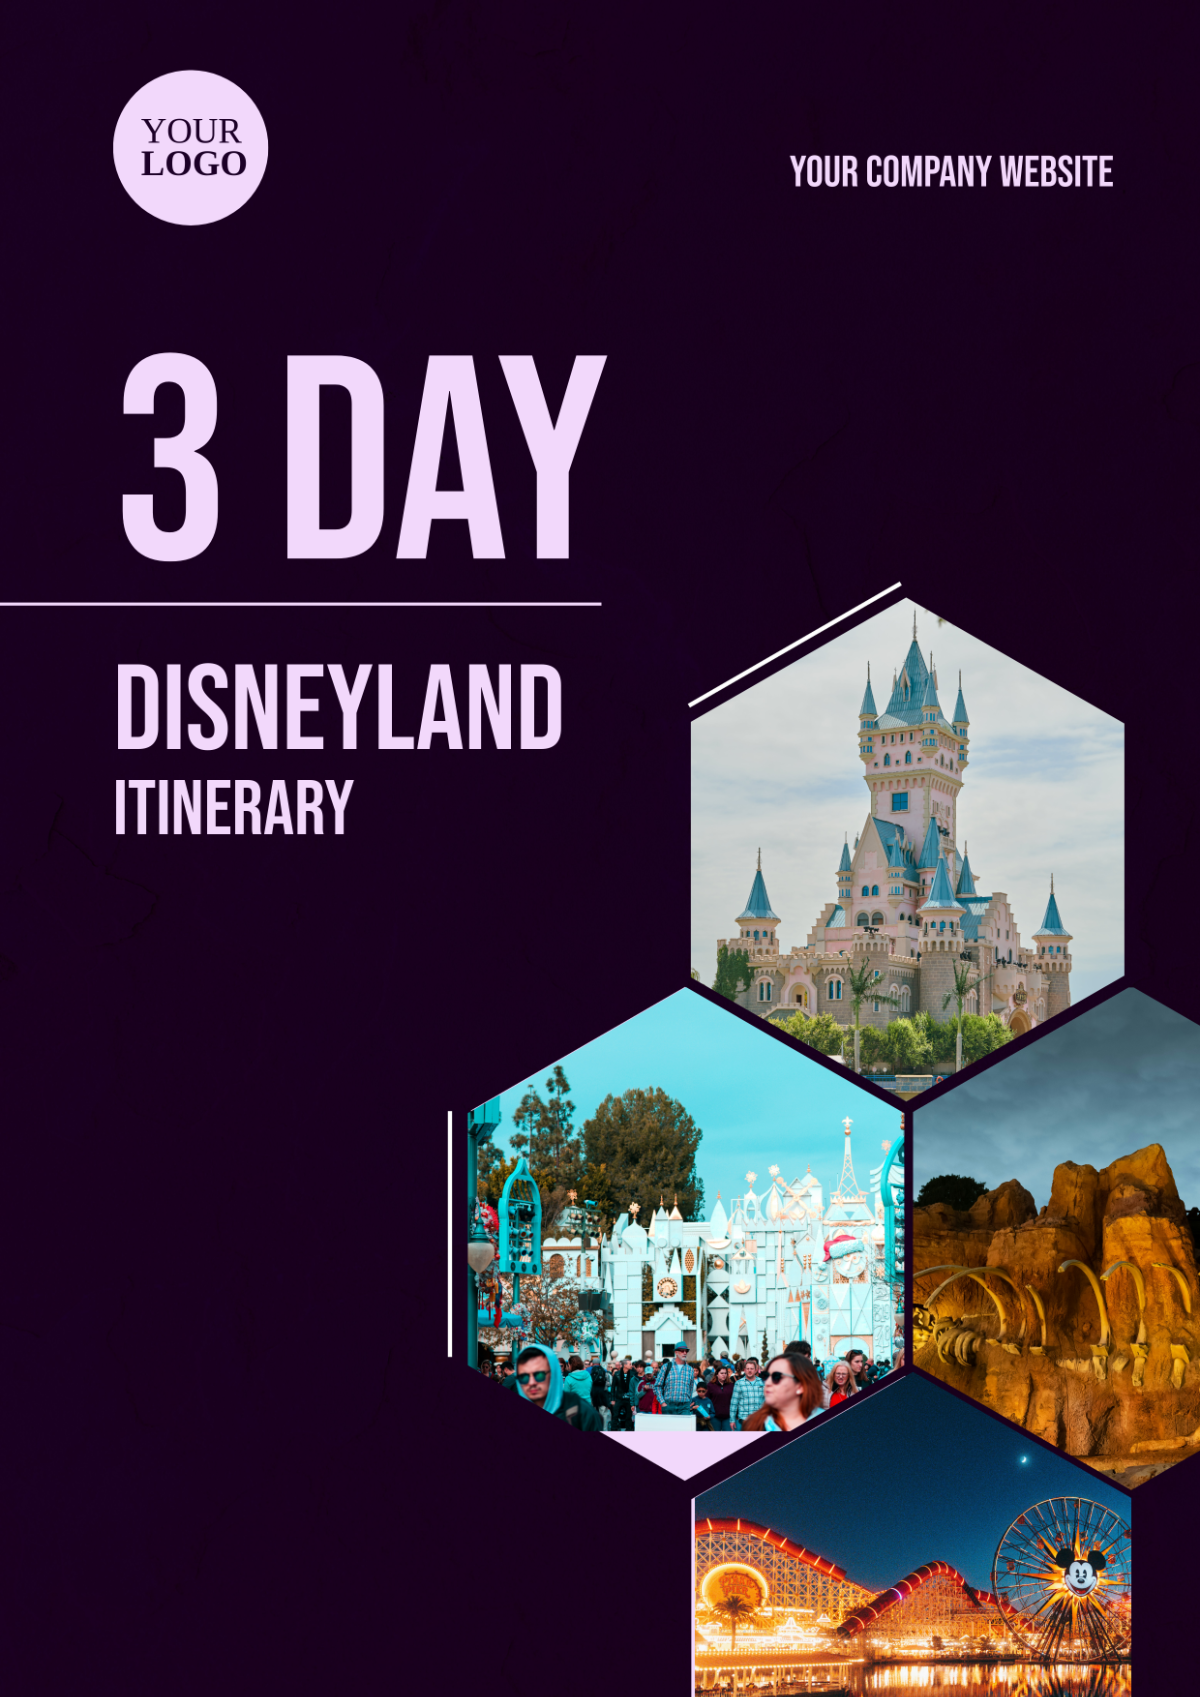 3 Day Disneyland Itinerary Template